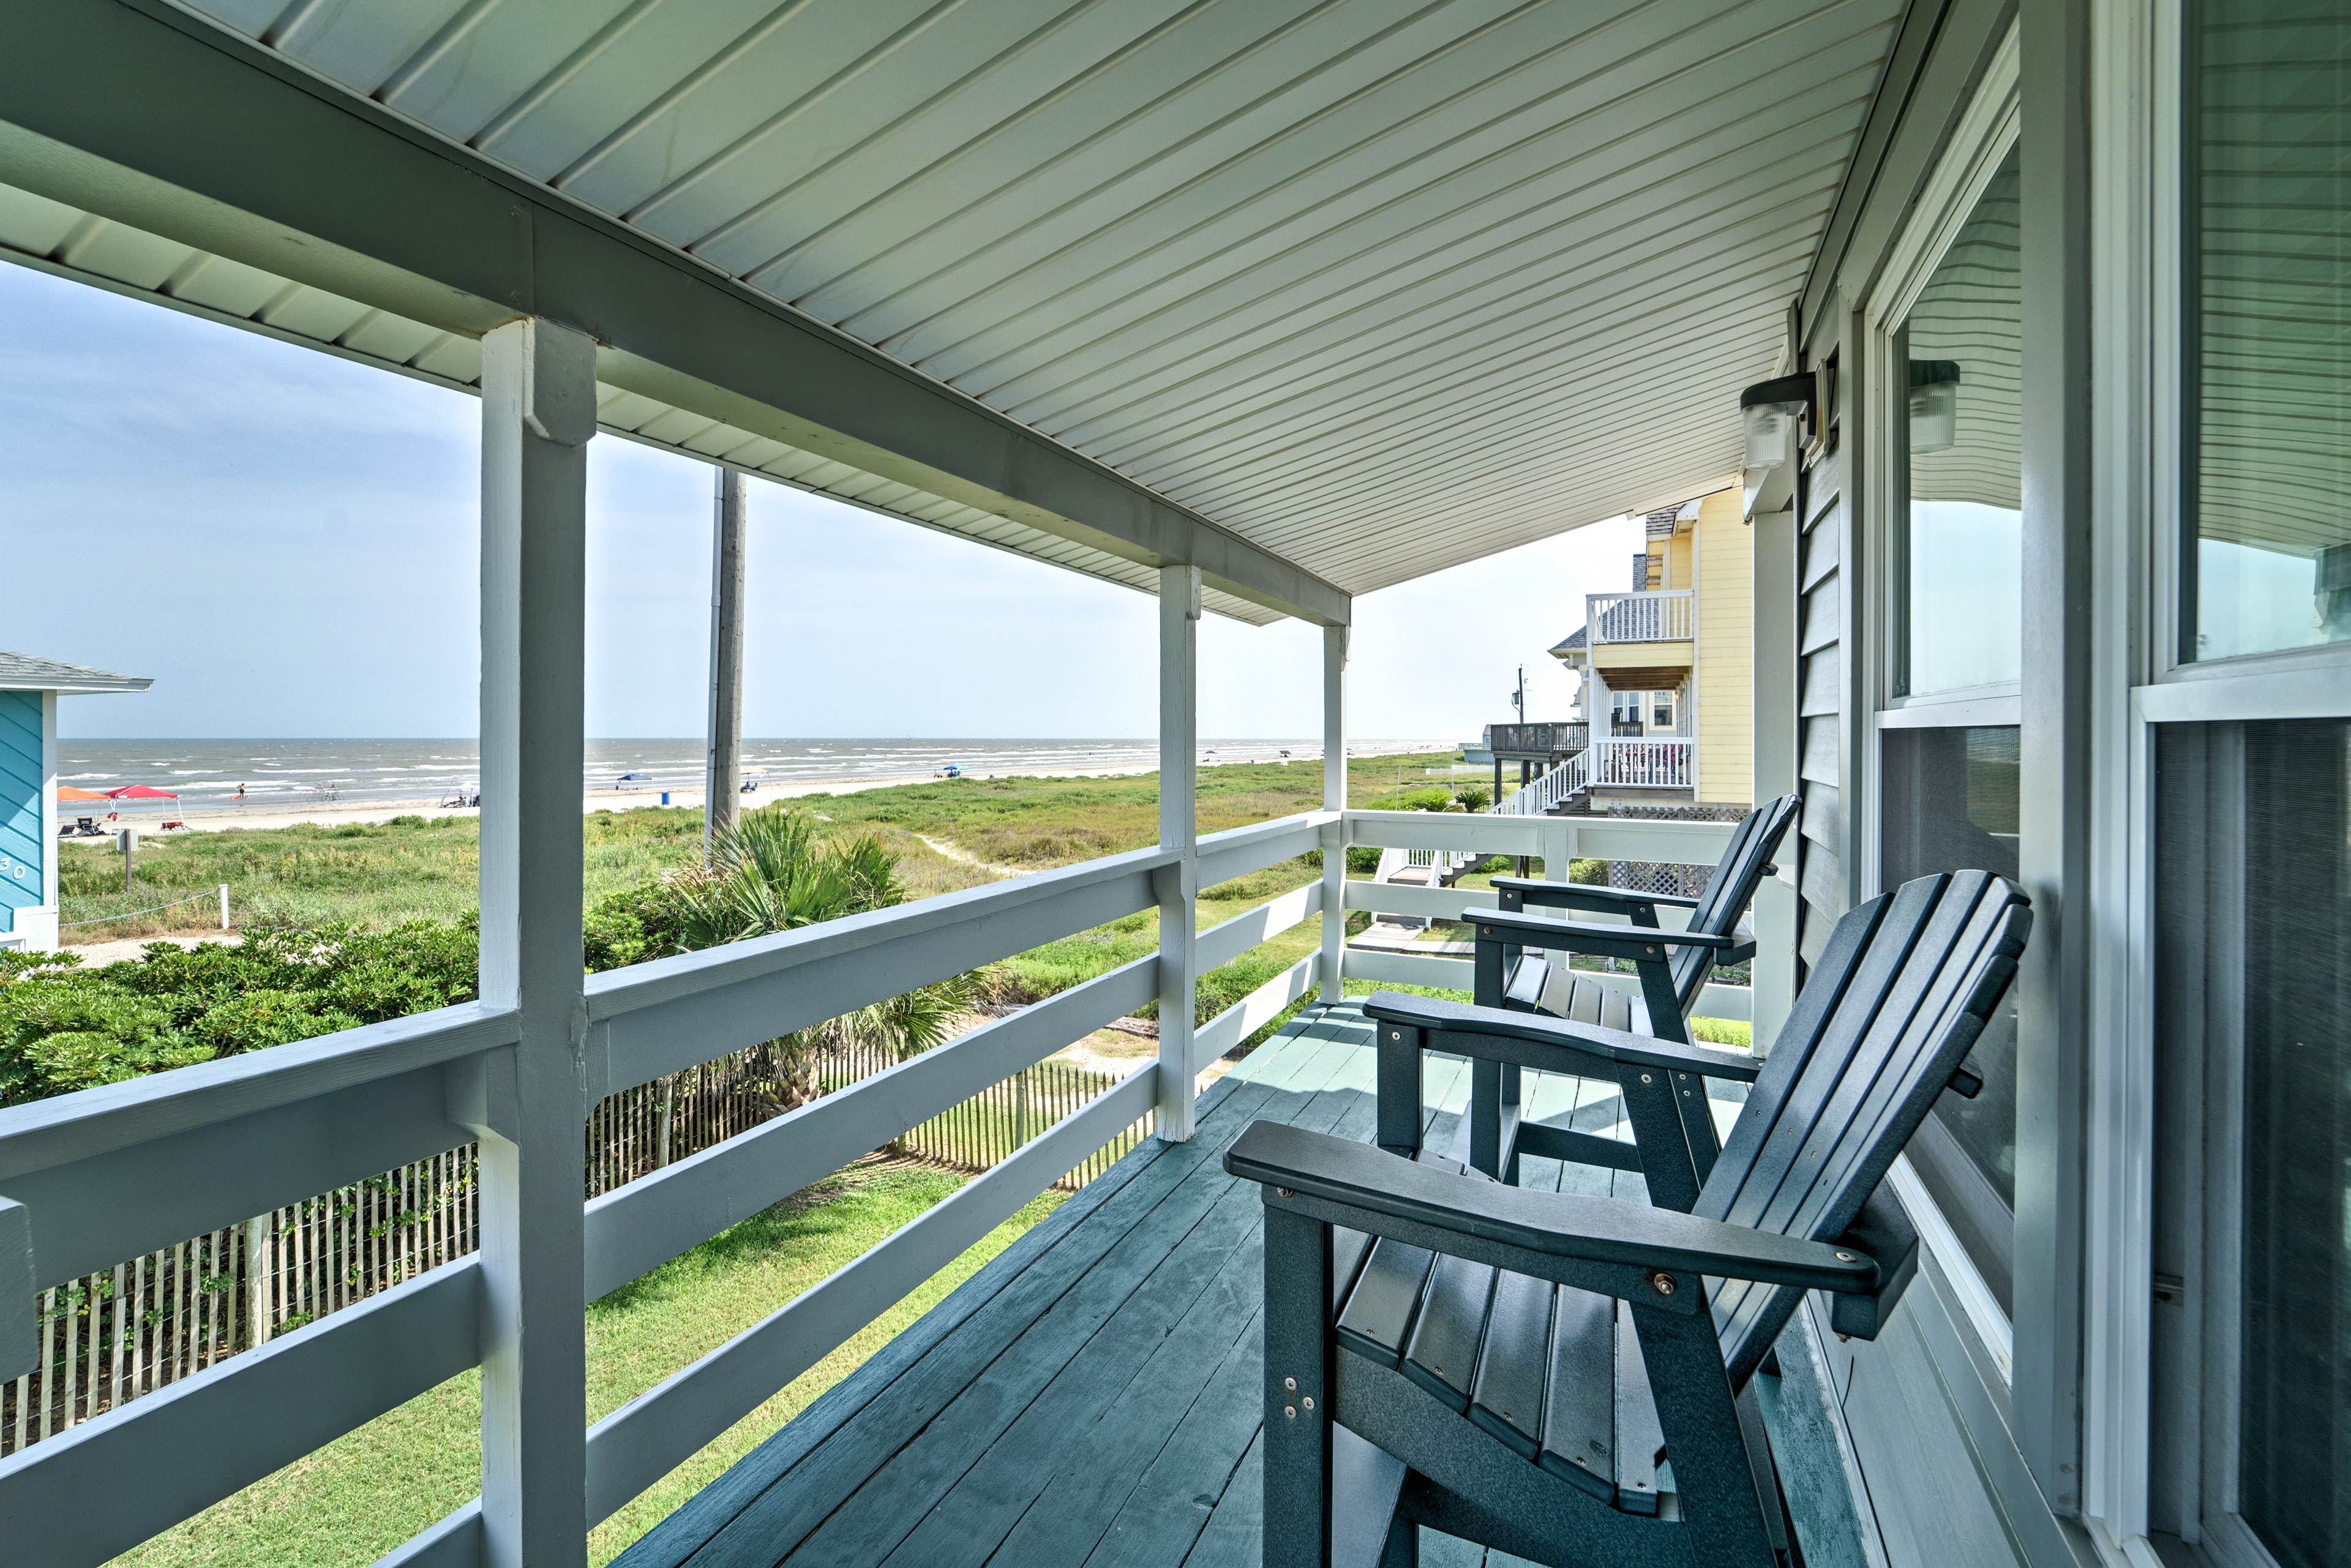 The ideal beach vacation awaits at this Galveston vacation rental house.